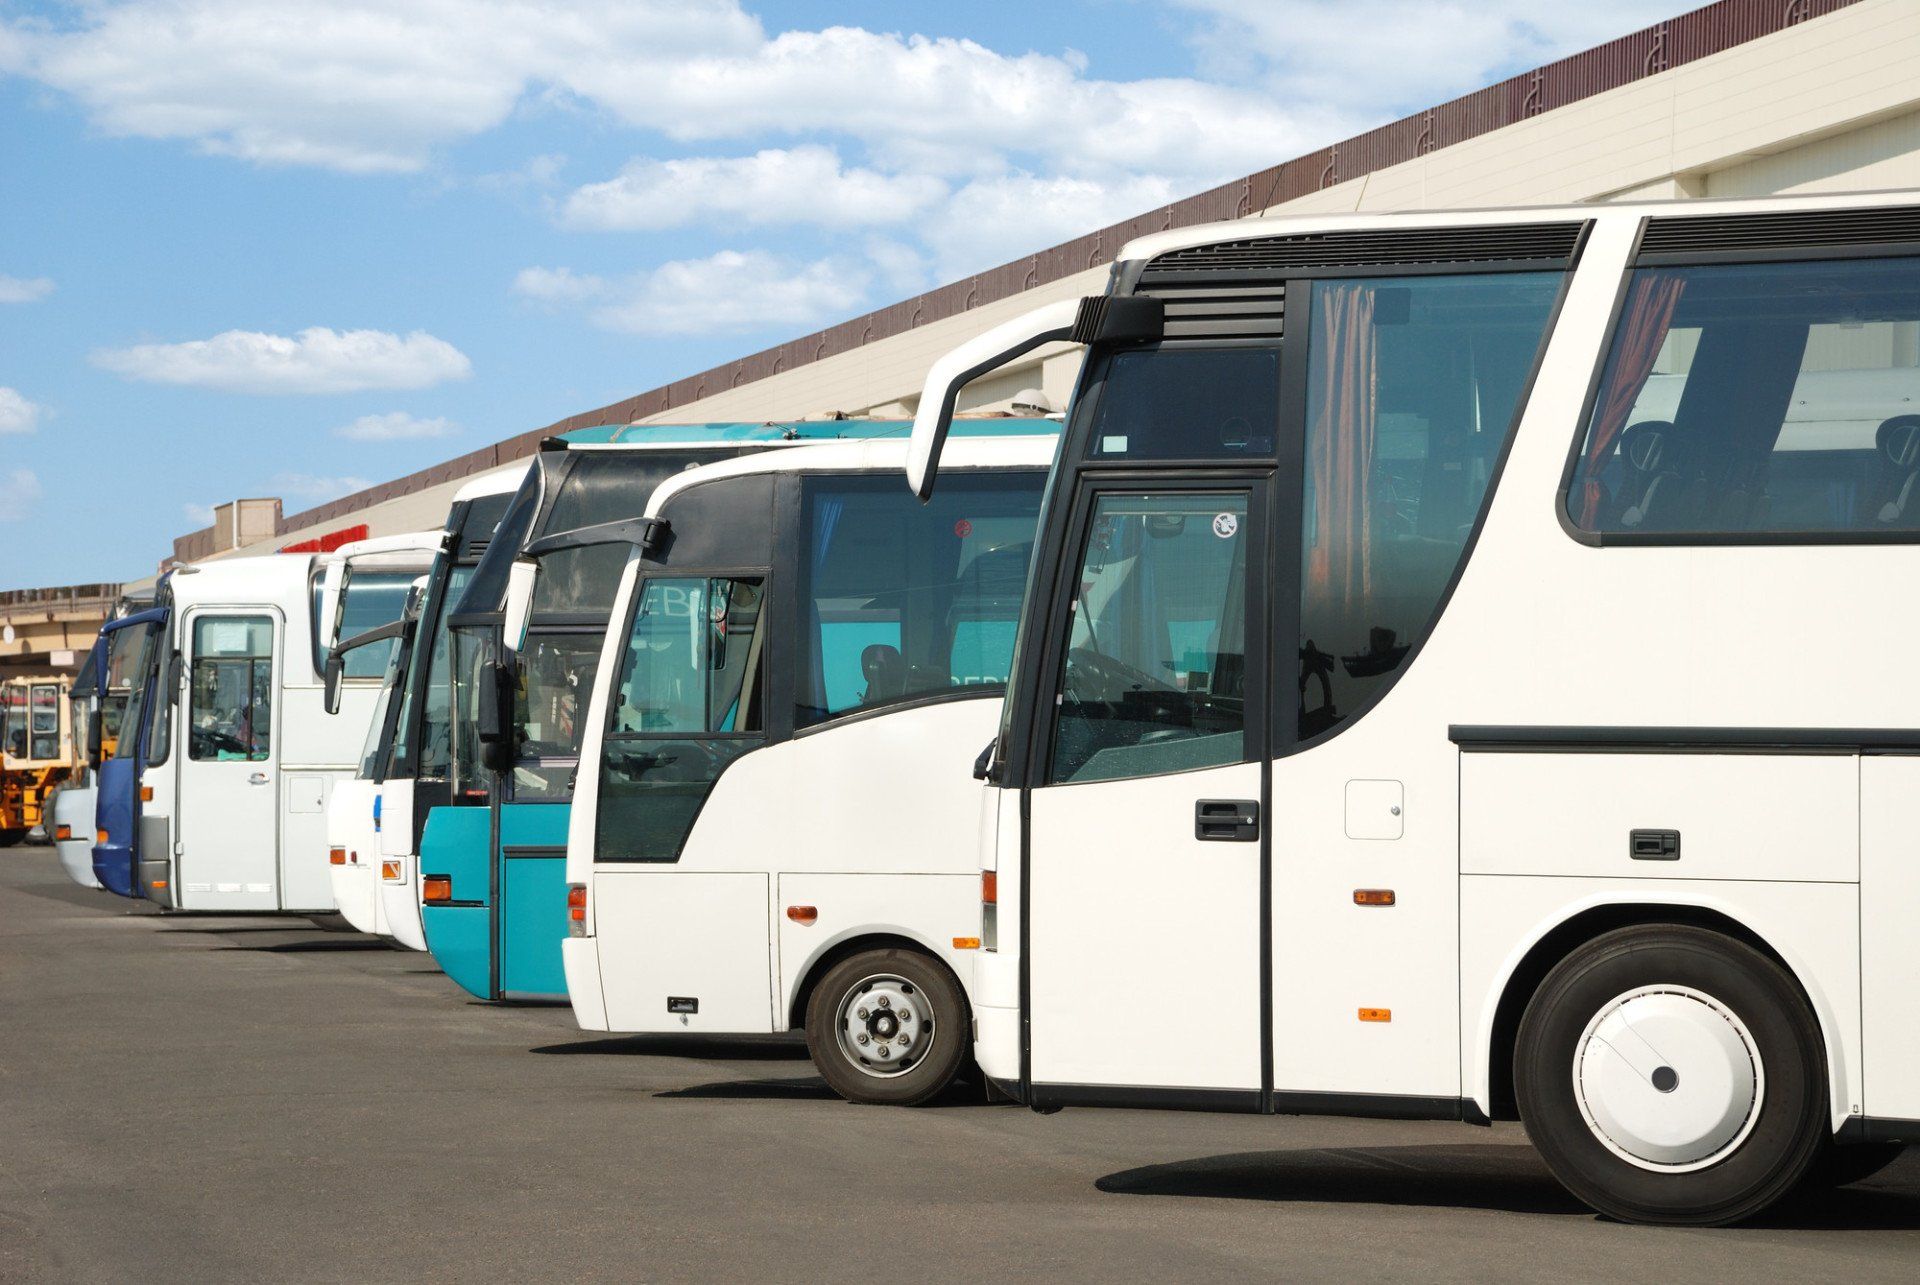 fleet of buses